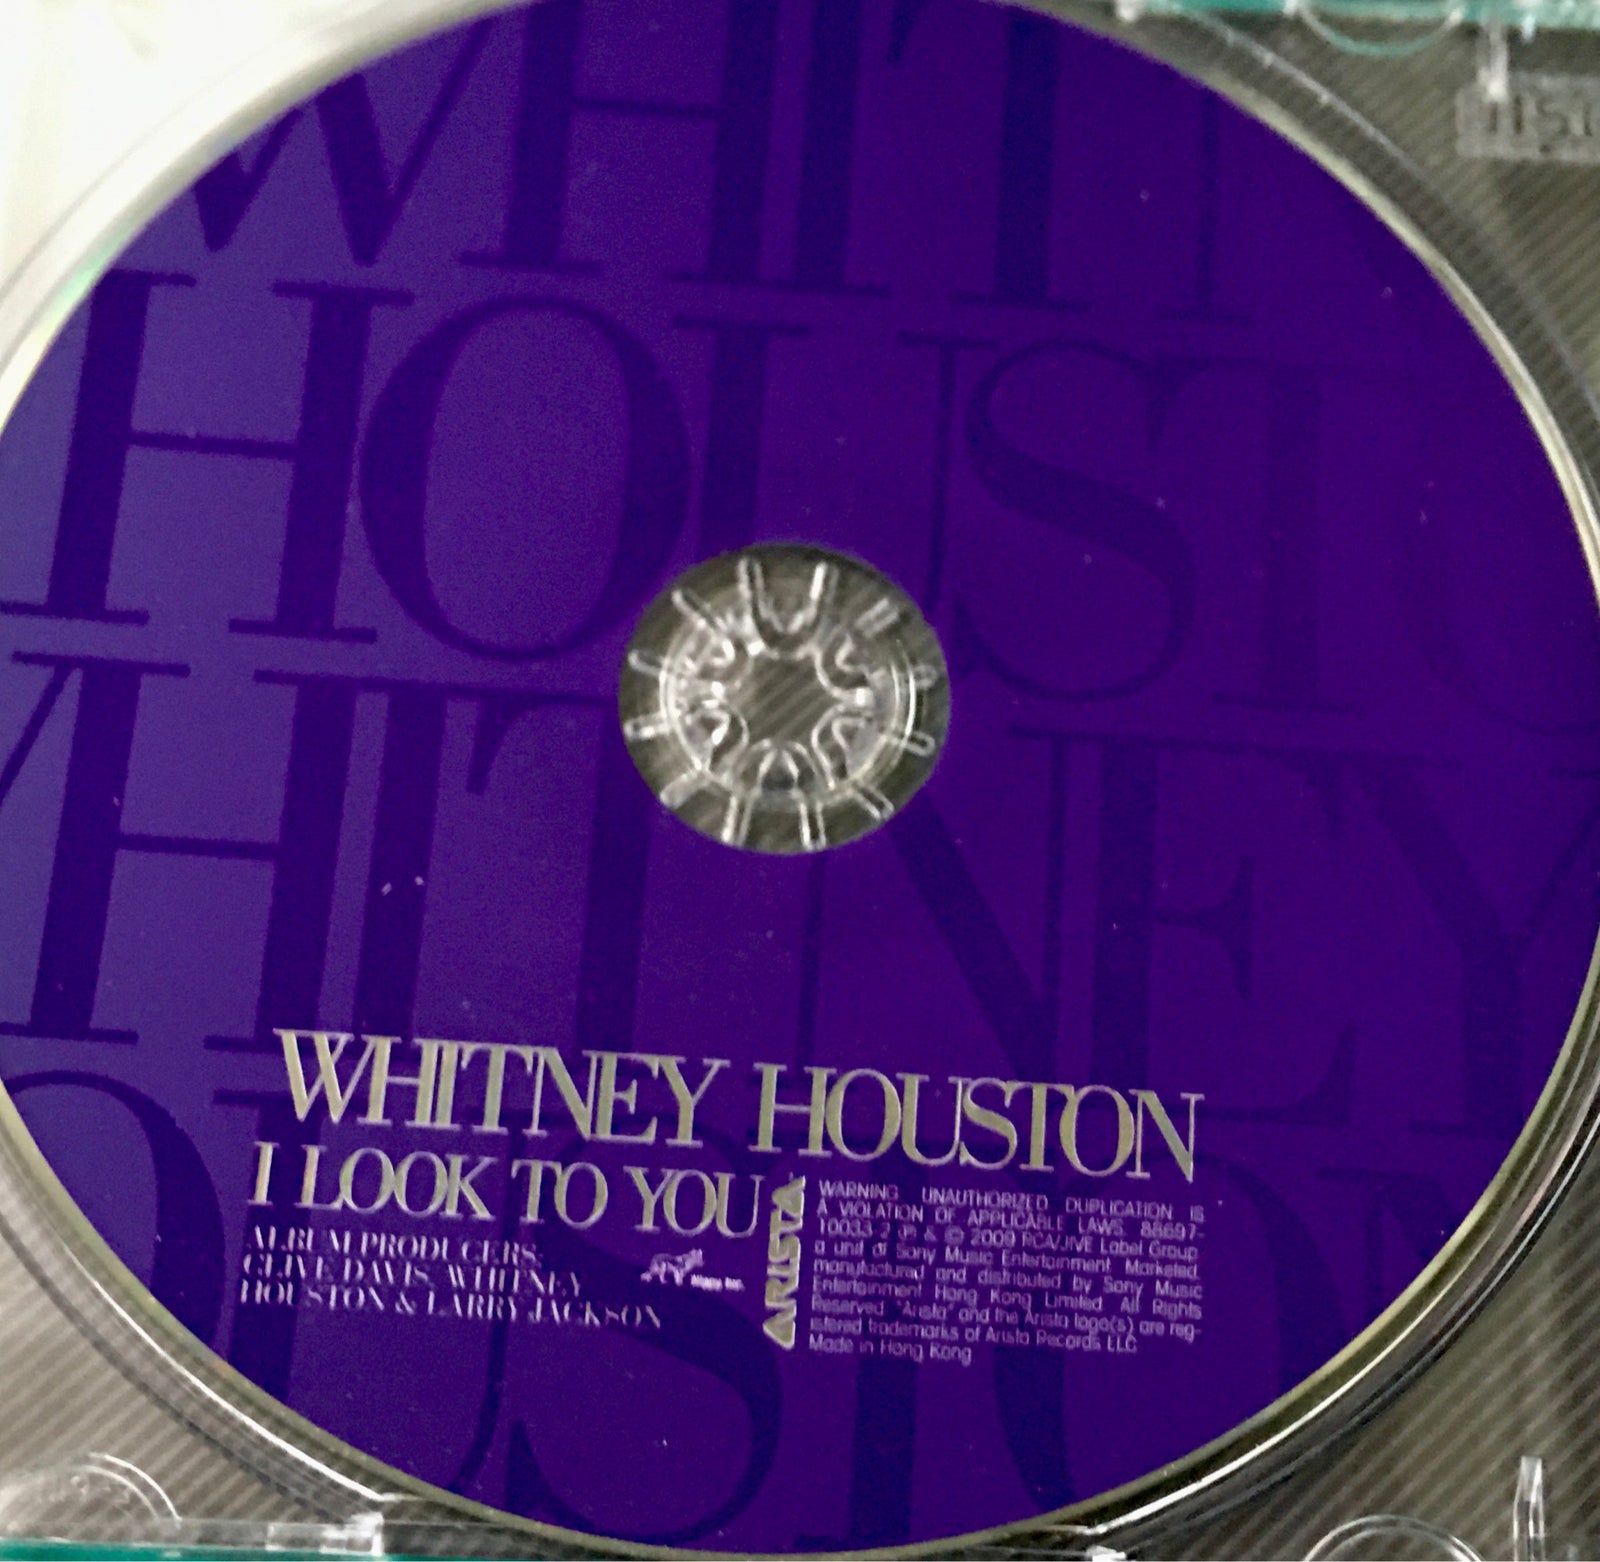 Whitney Houston: I look to you, pop